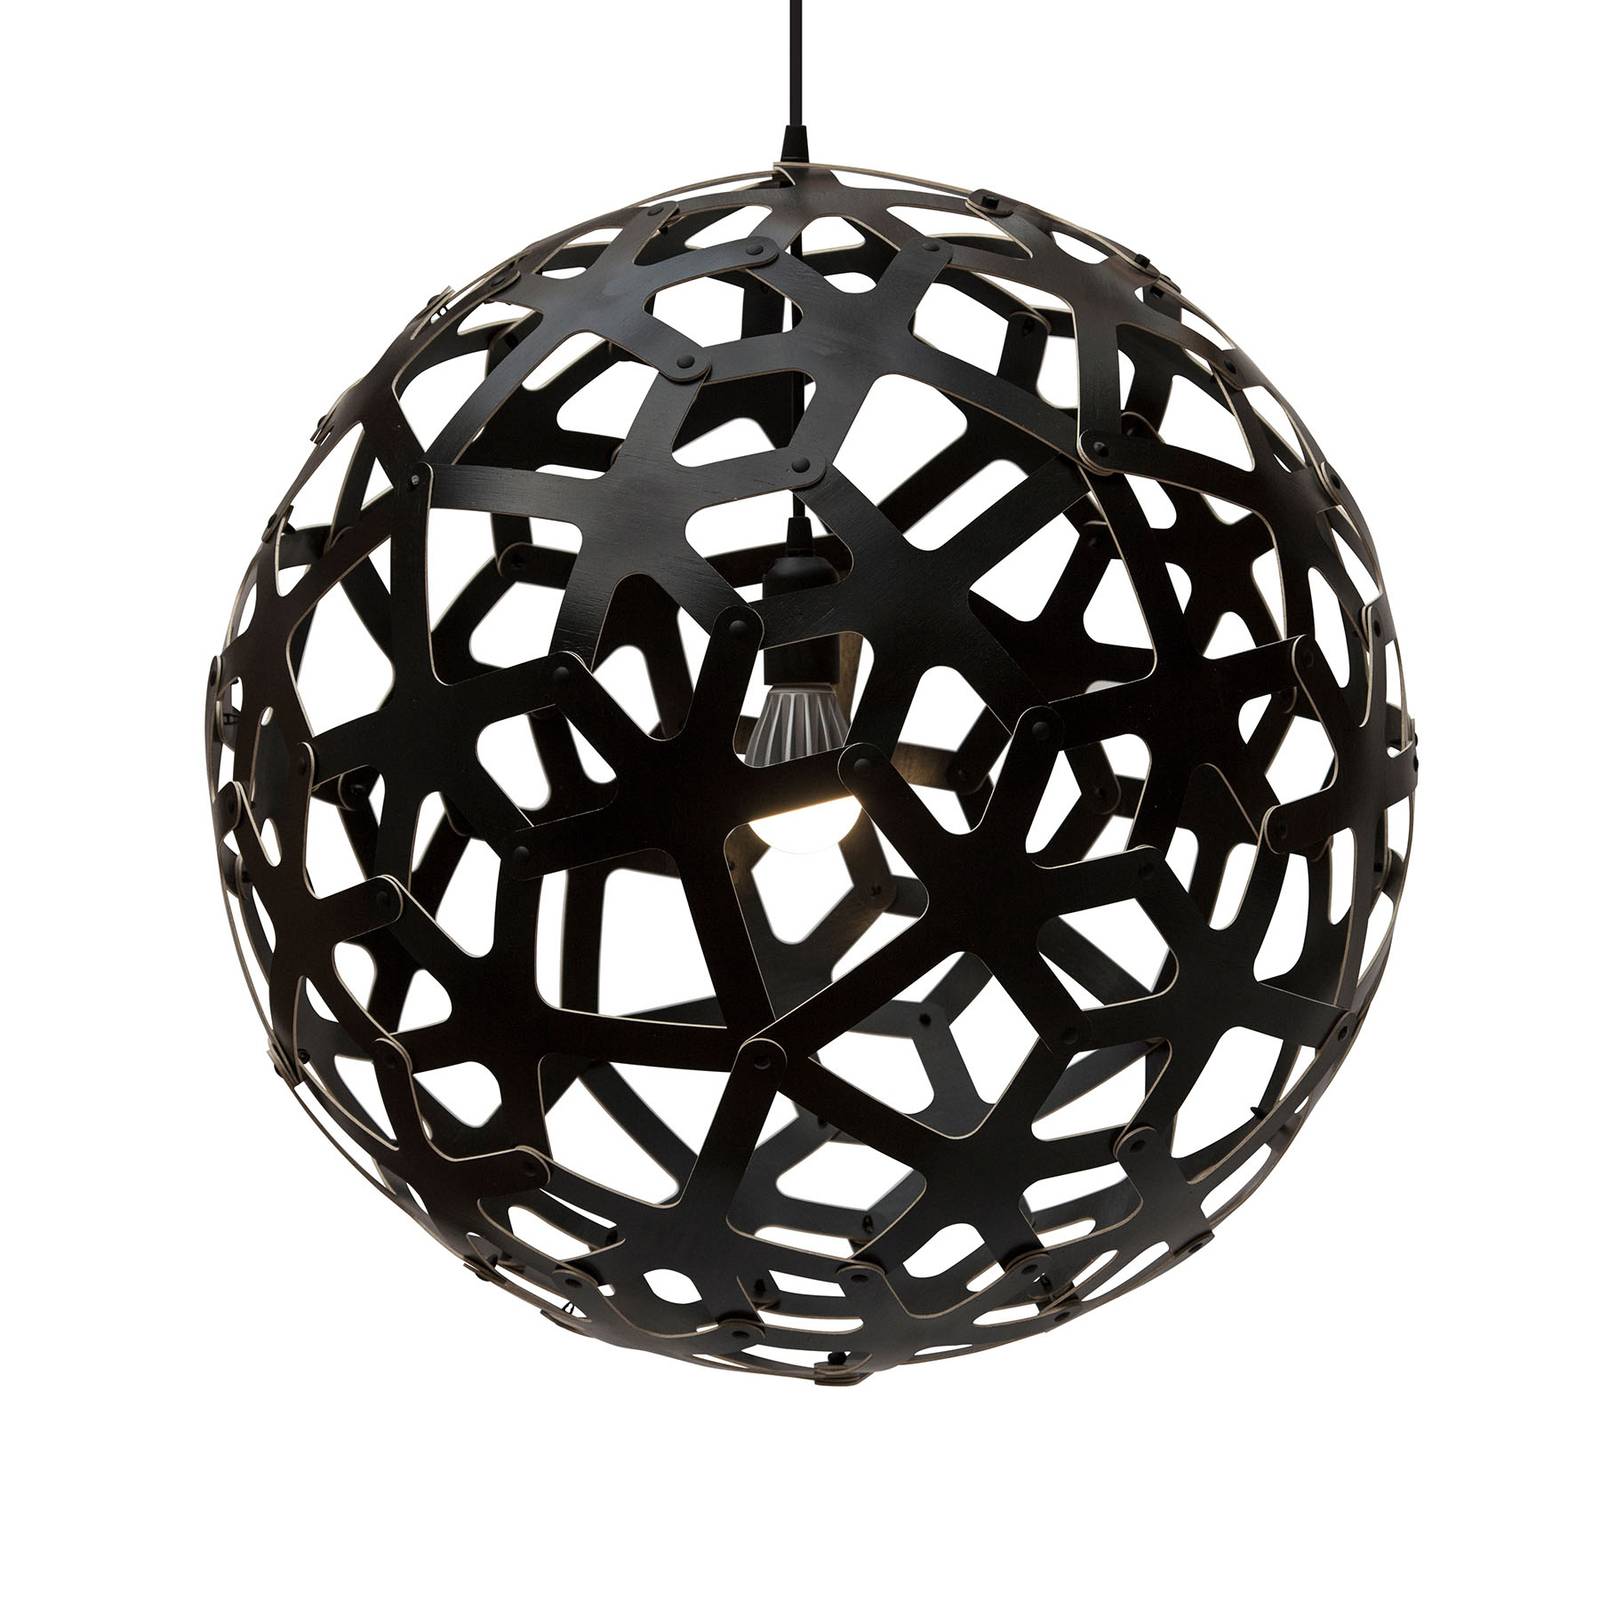 E-shop david trubridge Coral závesná lampa Ø 60cm čierna